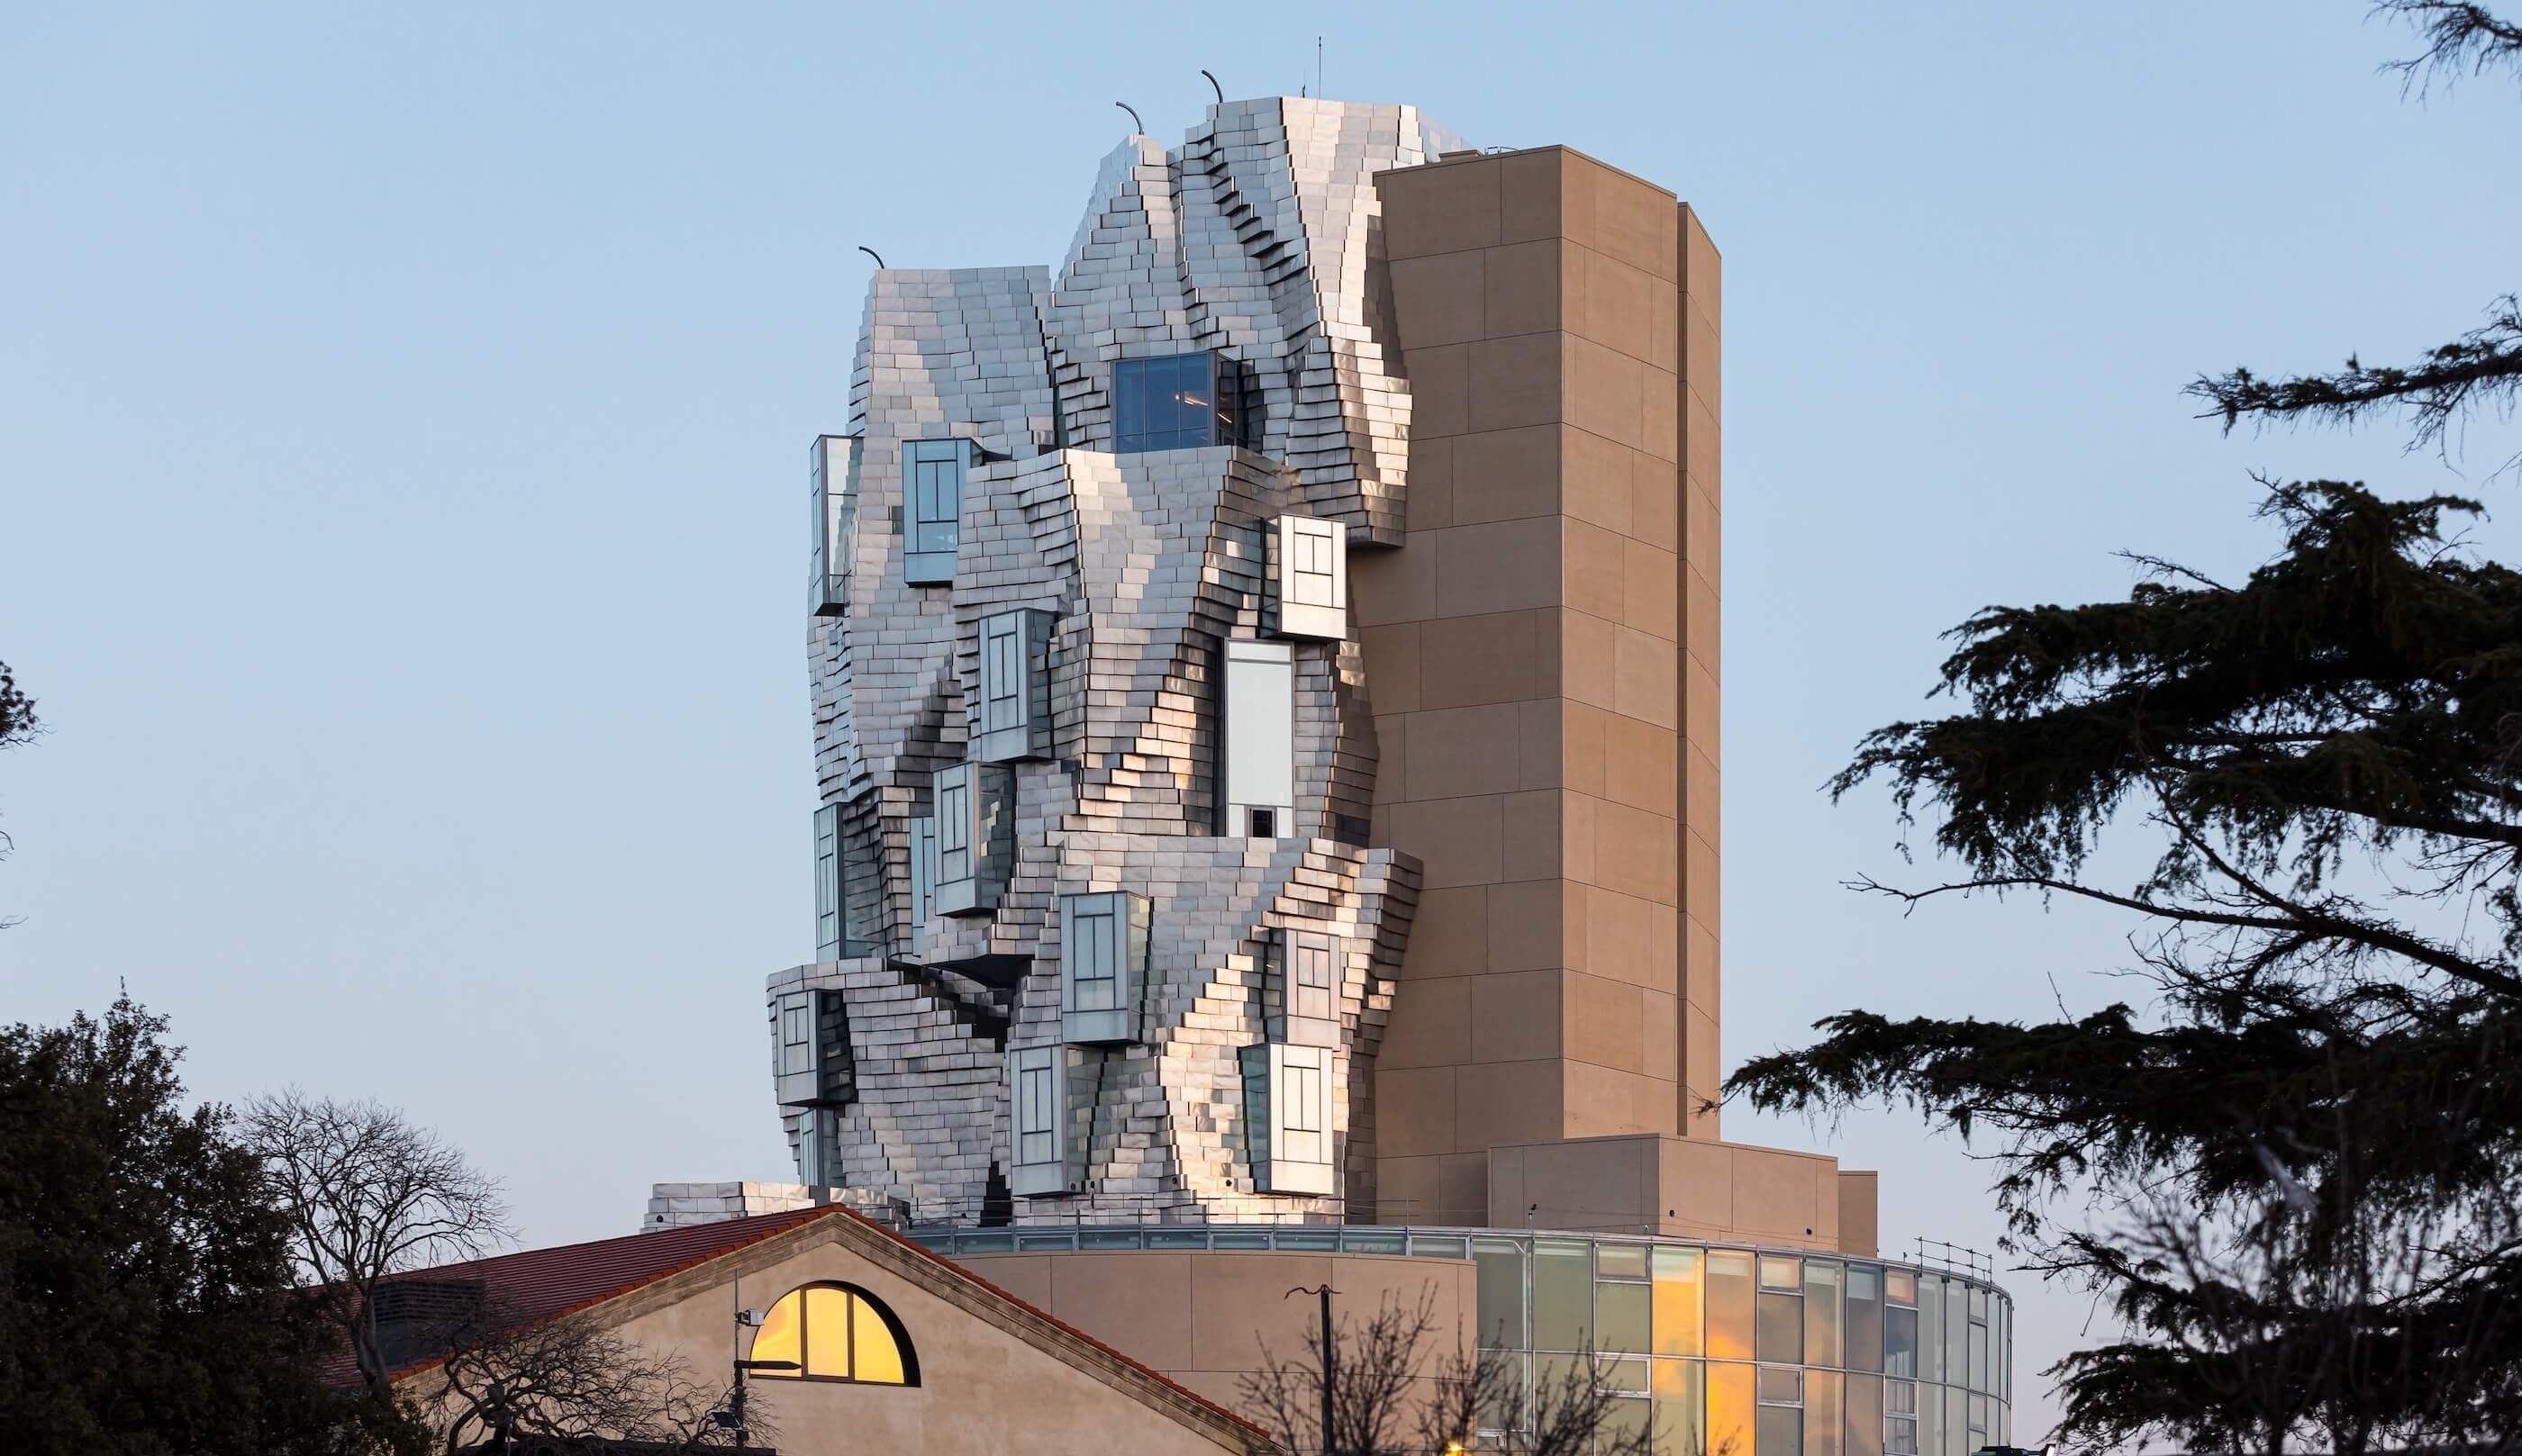 Luma Arles begins in Provence focusing on Frank Gehry’s polarizing centerpiece